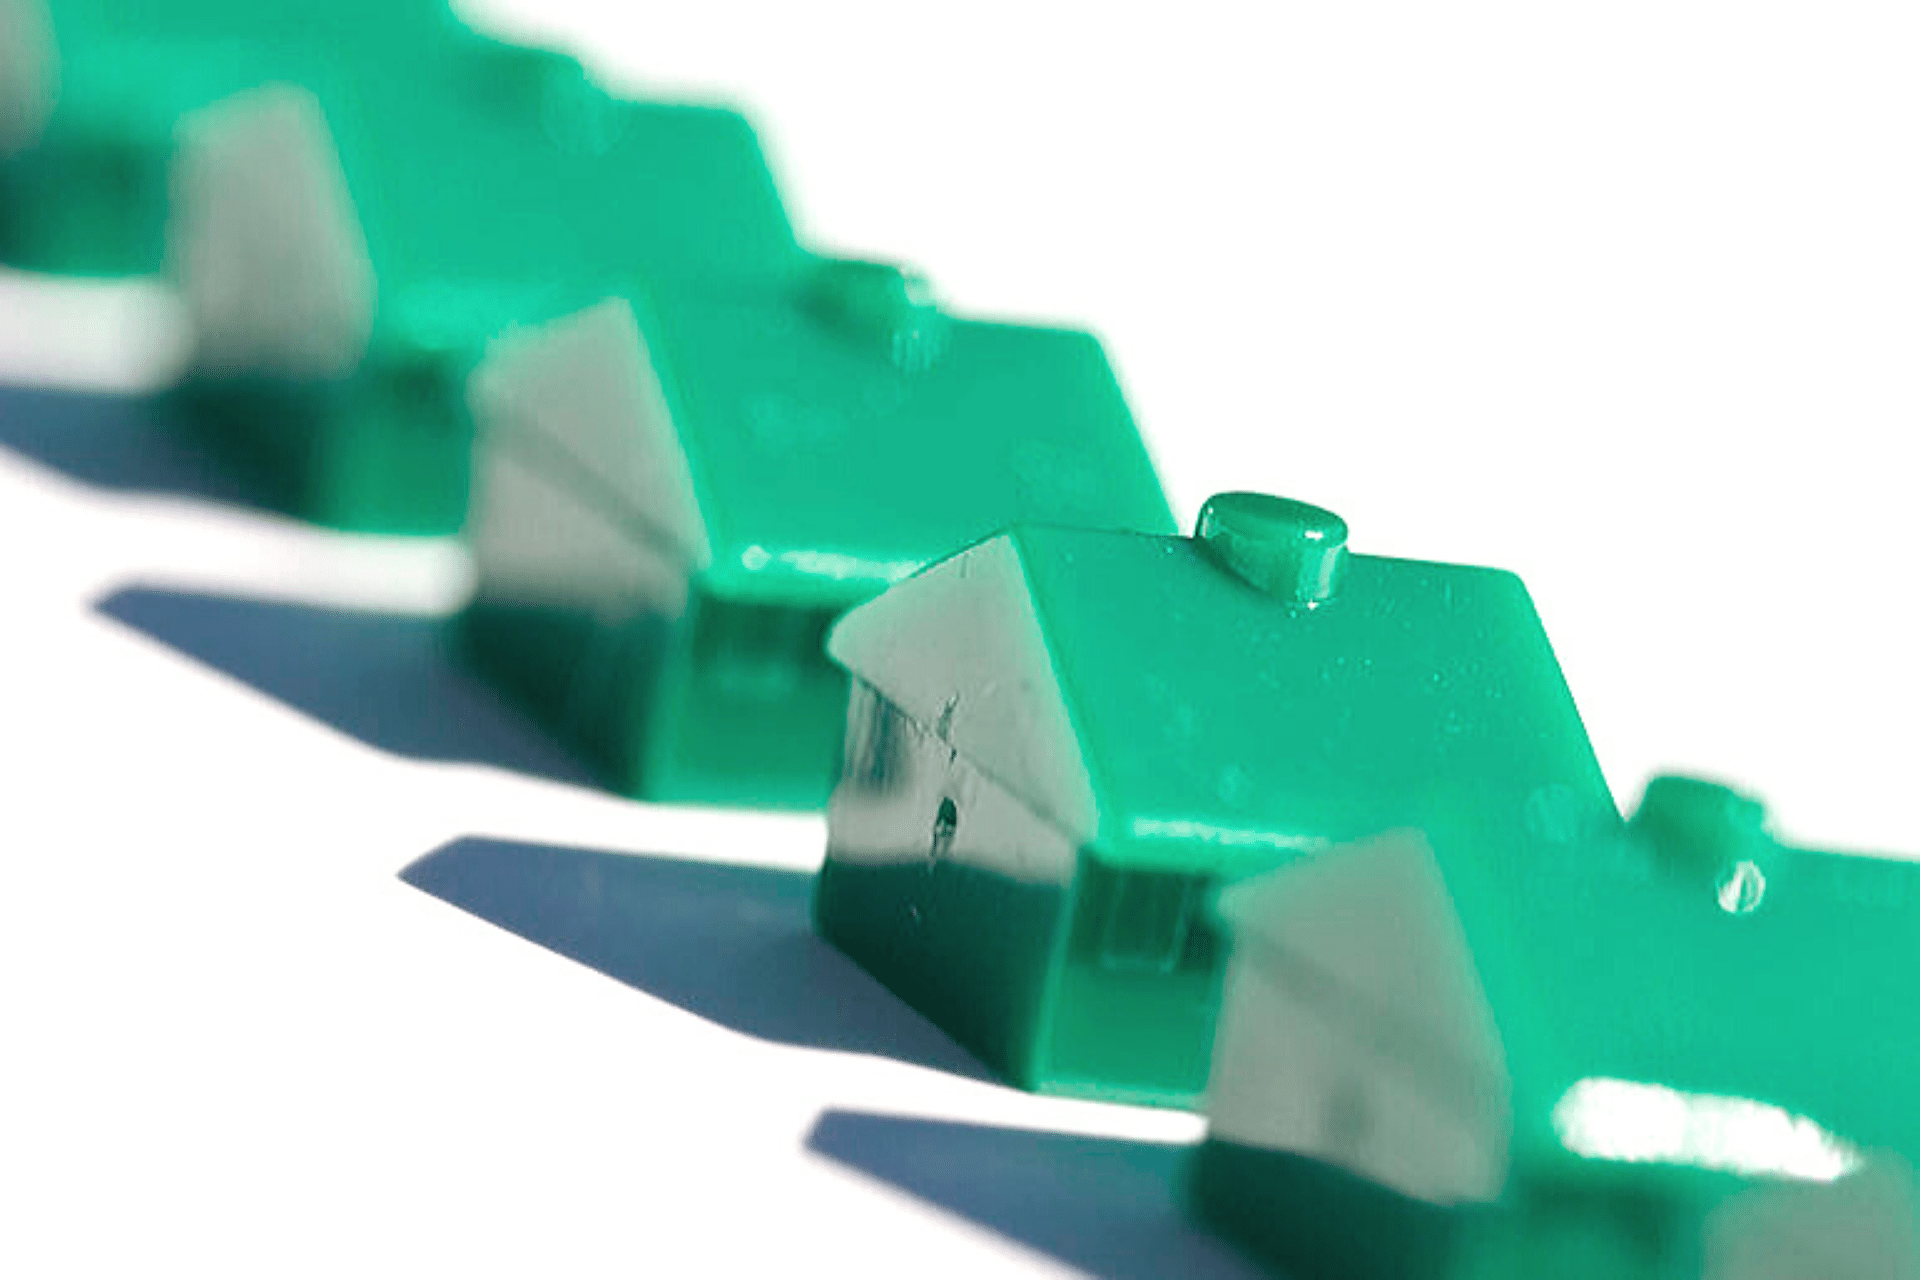 A row of three tiny green toy houses.